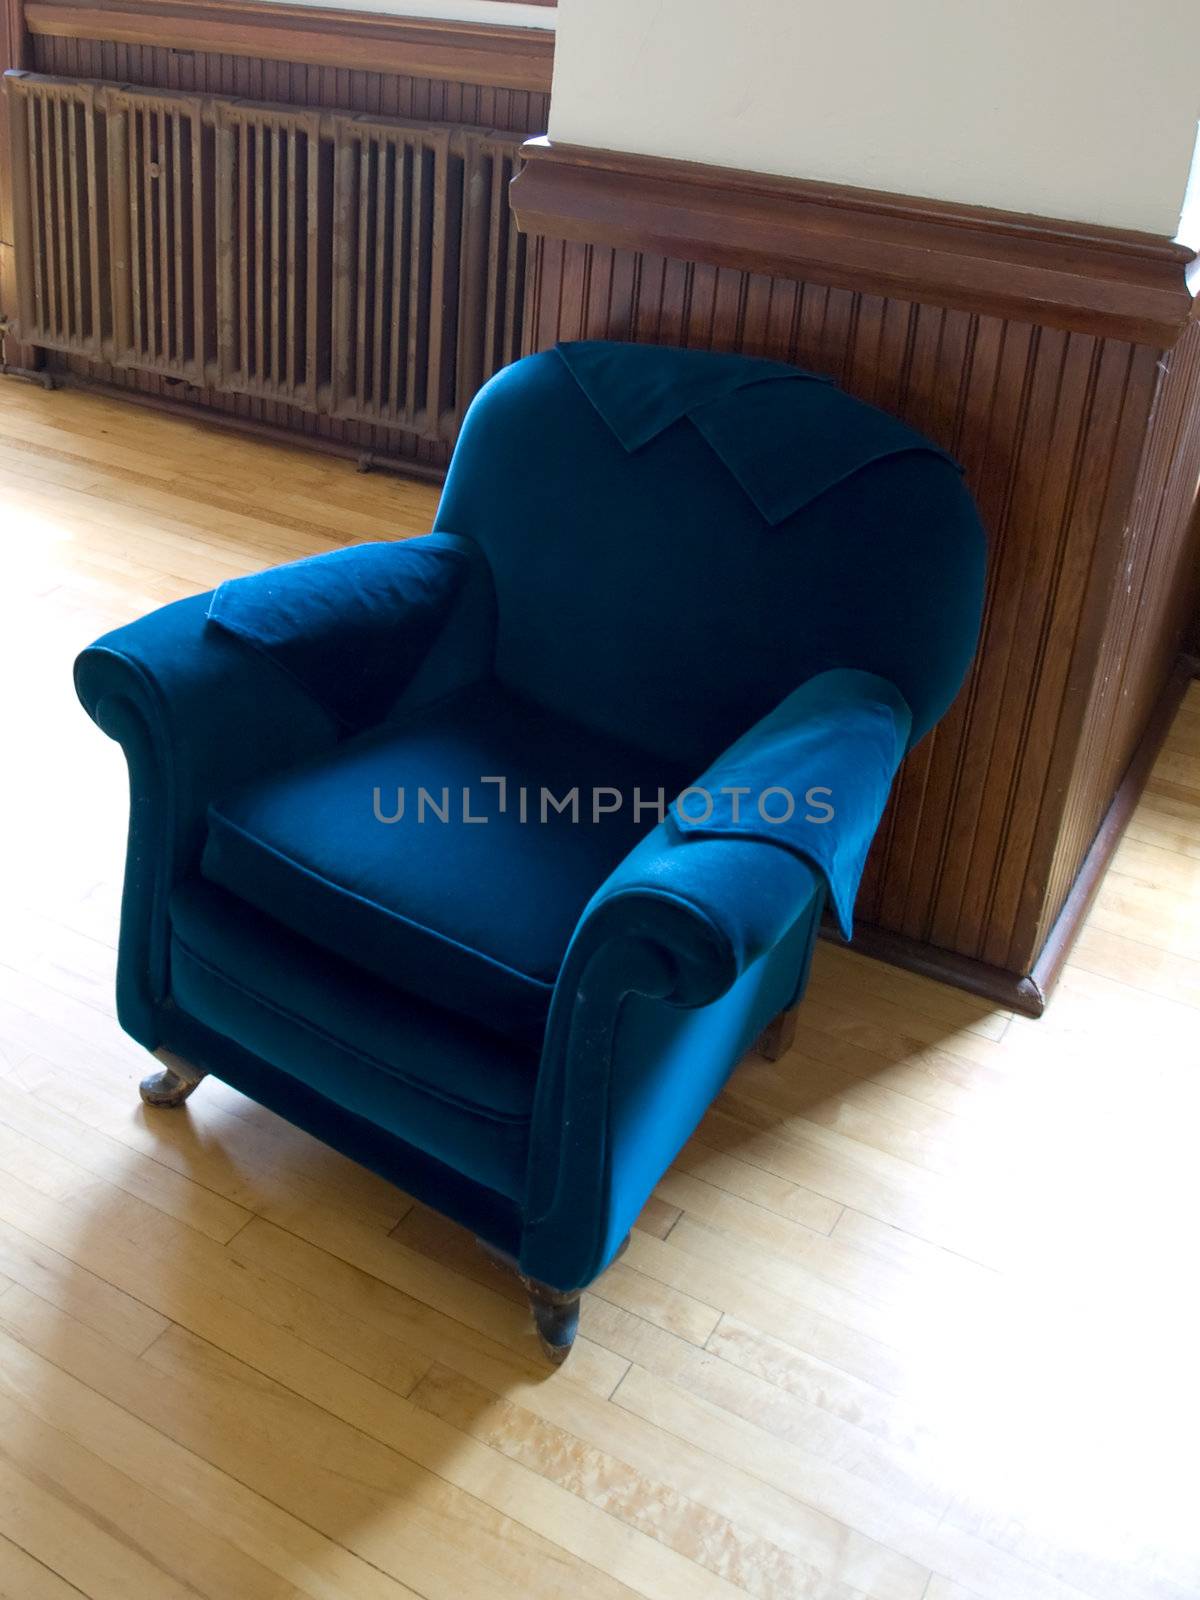 Velvet blue armchair inviting in a warm sunlit room.